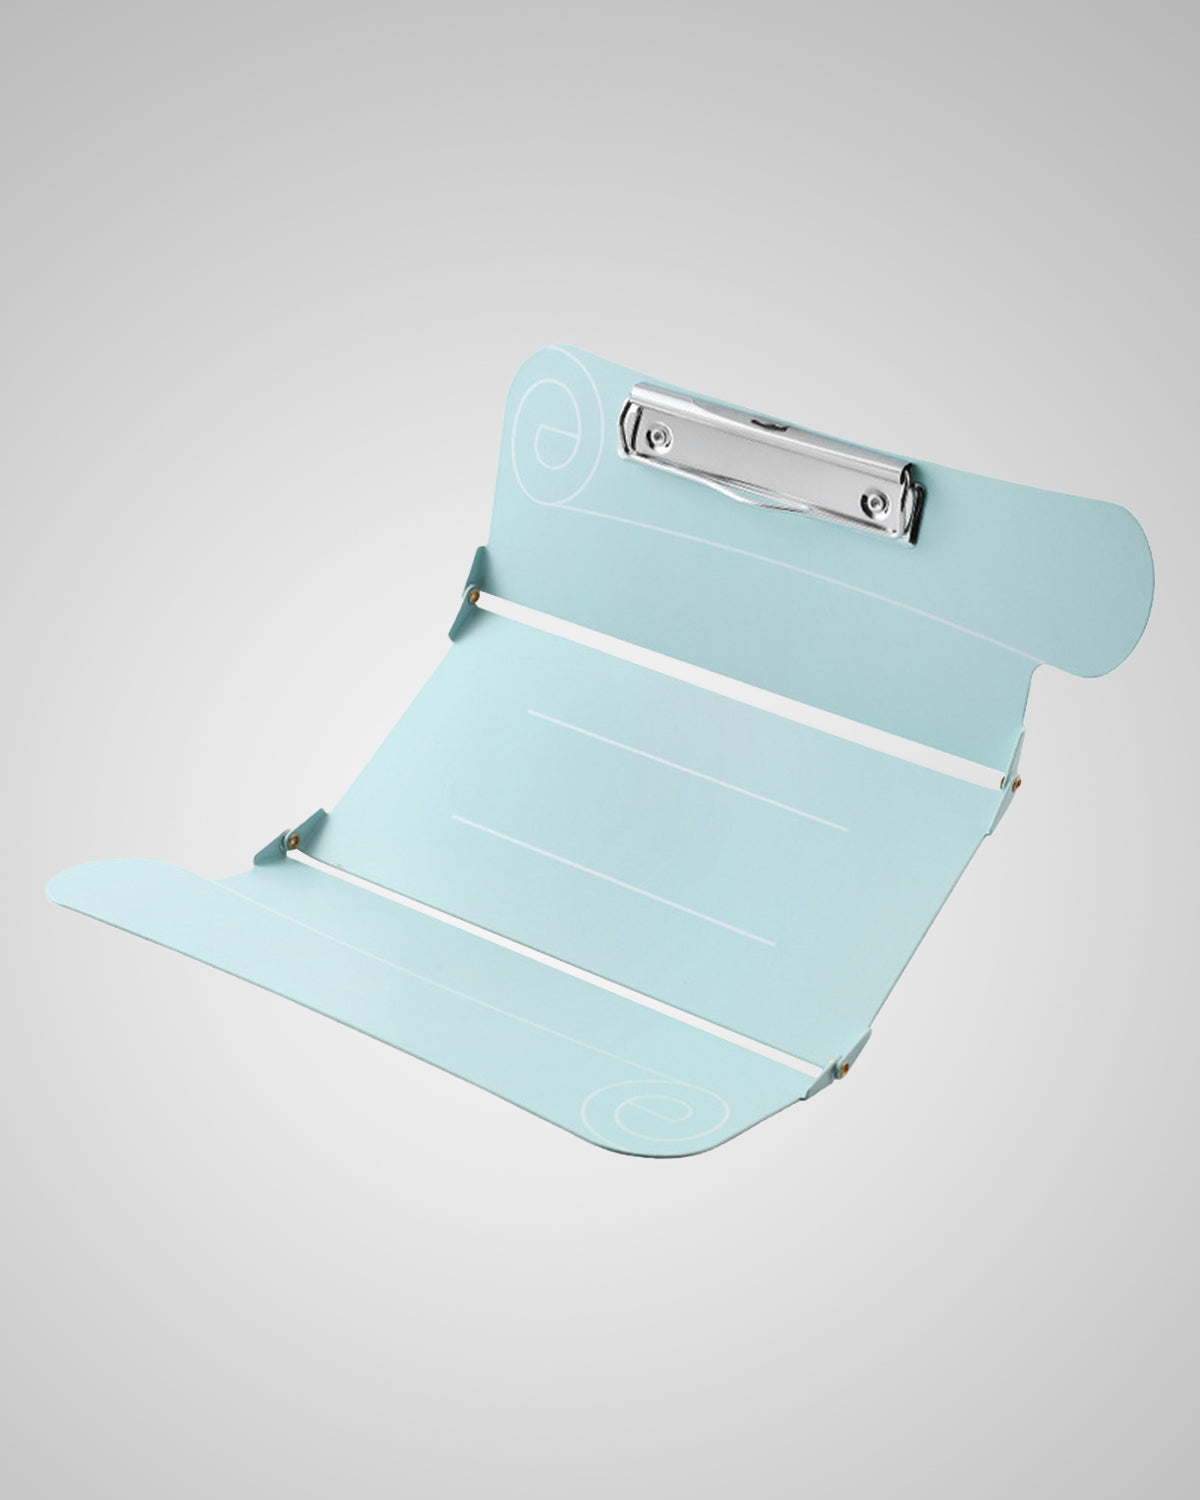 Hawkwell Foldable Clipboard - Viana Green 3 Layers